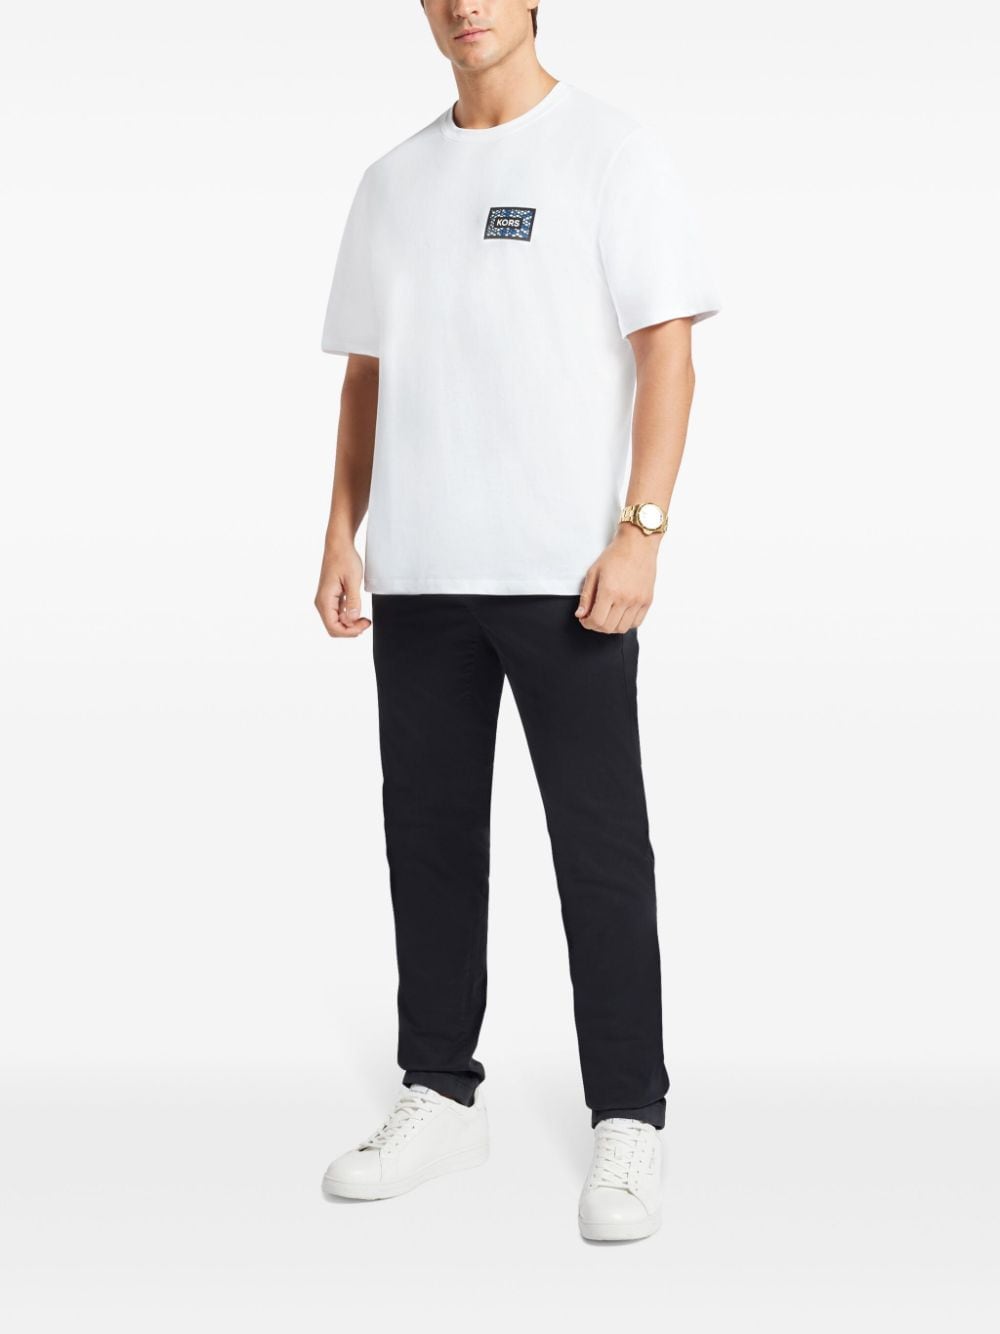 Michael Kors Katoenen T-shirt - Wit